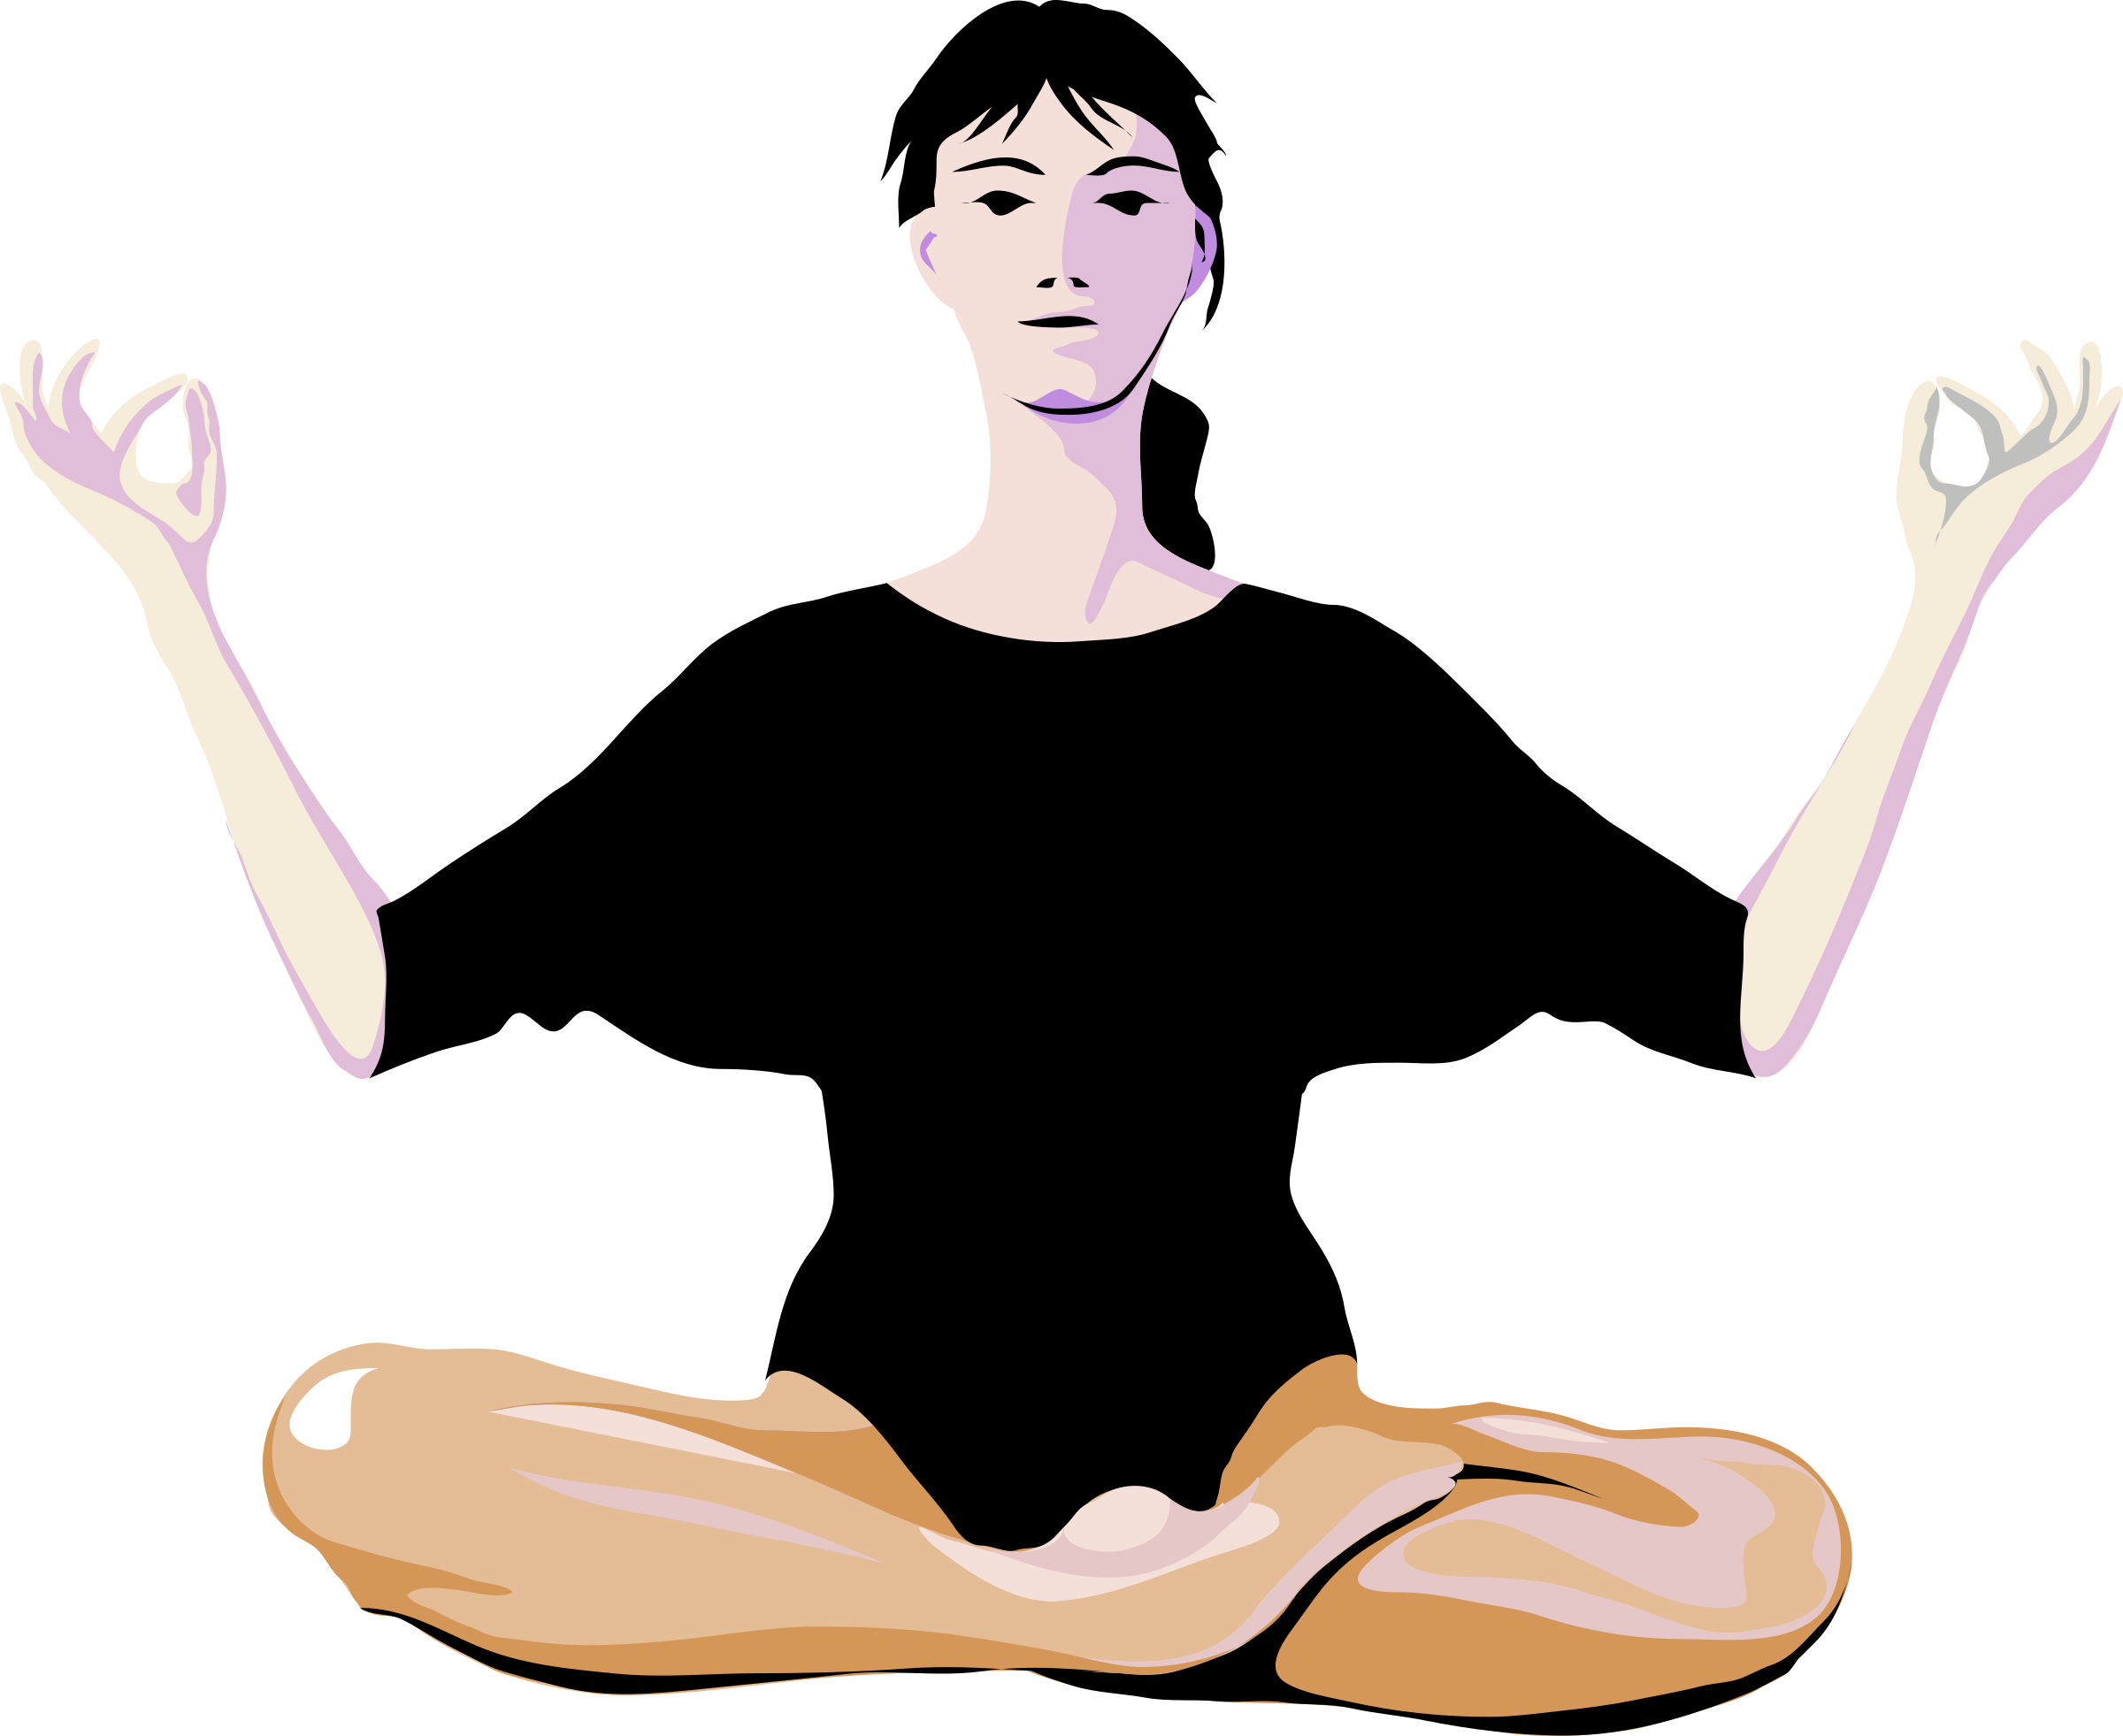 Meditation yoga woman